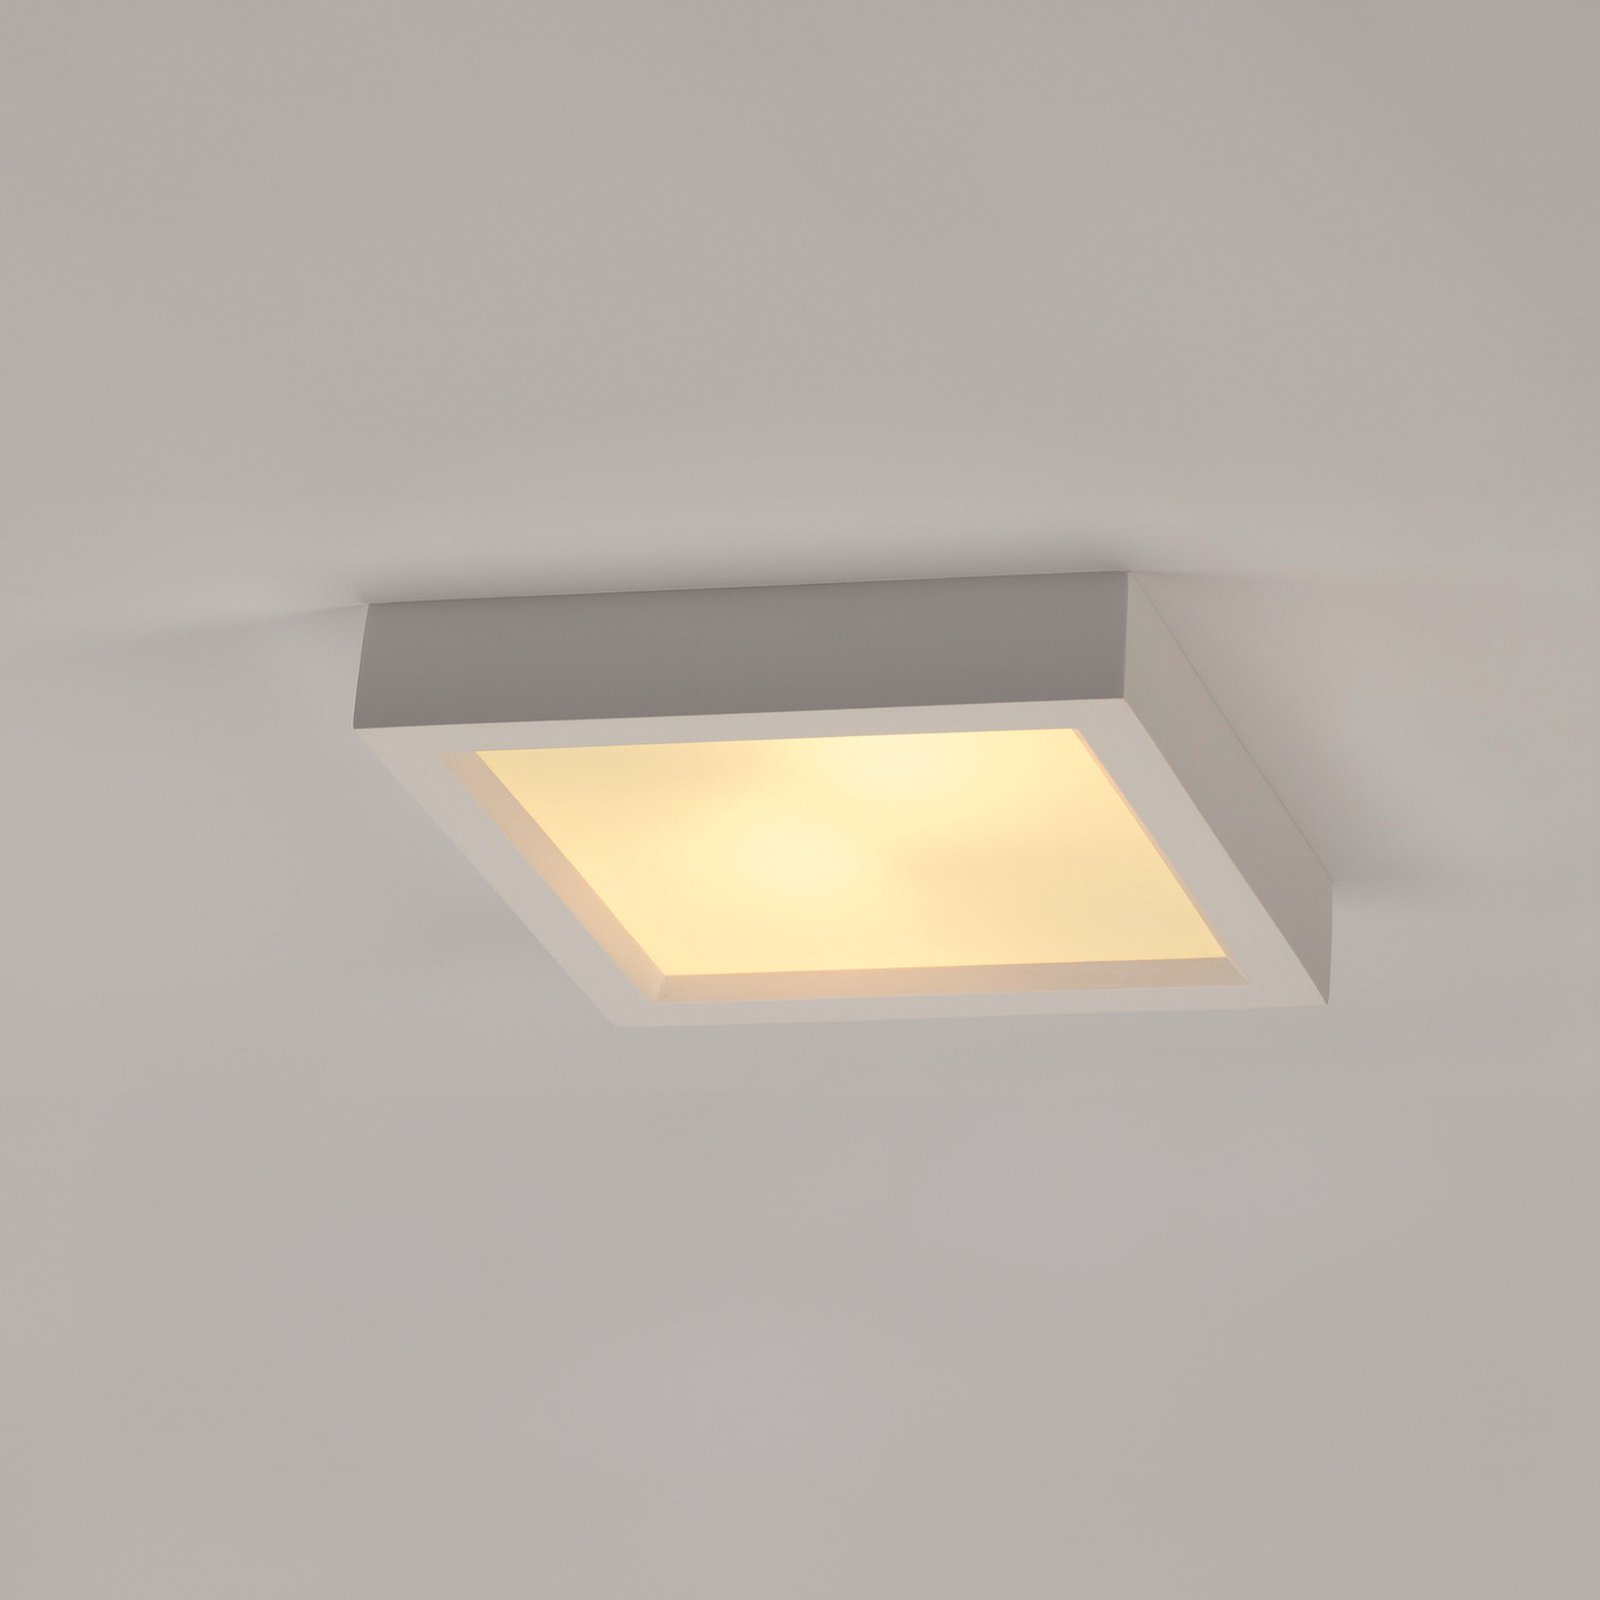 SLV лампа за таван Plastra 104, бяла, гипс, ширина 25 cm